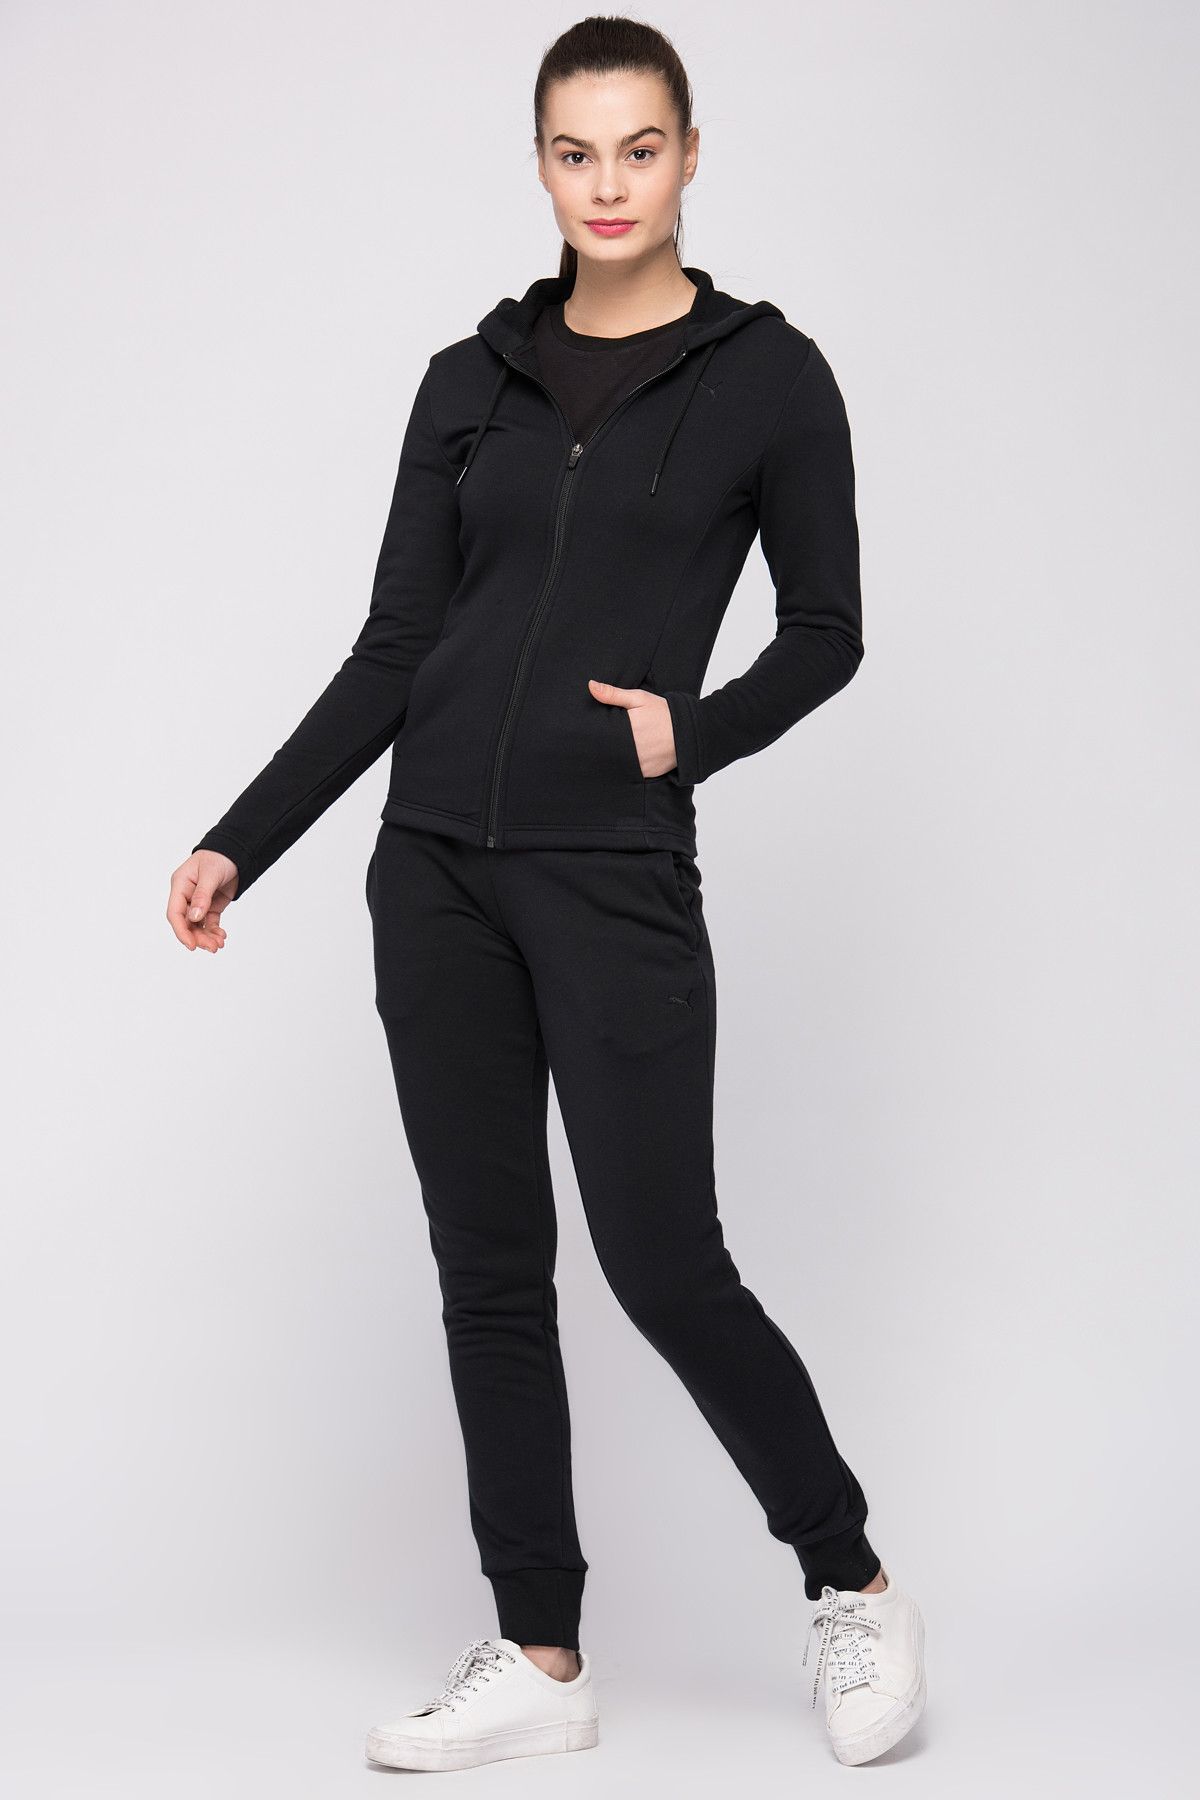 Puma Classic Sweat Suit,cl Siyah Kadın Eşofman Takımı 100385379